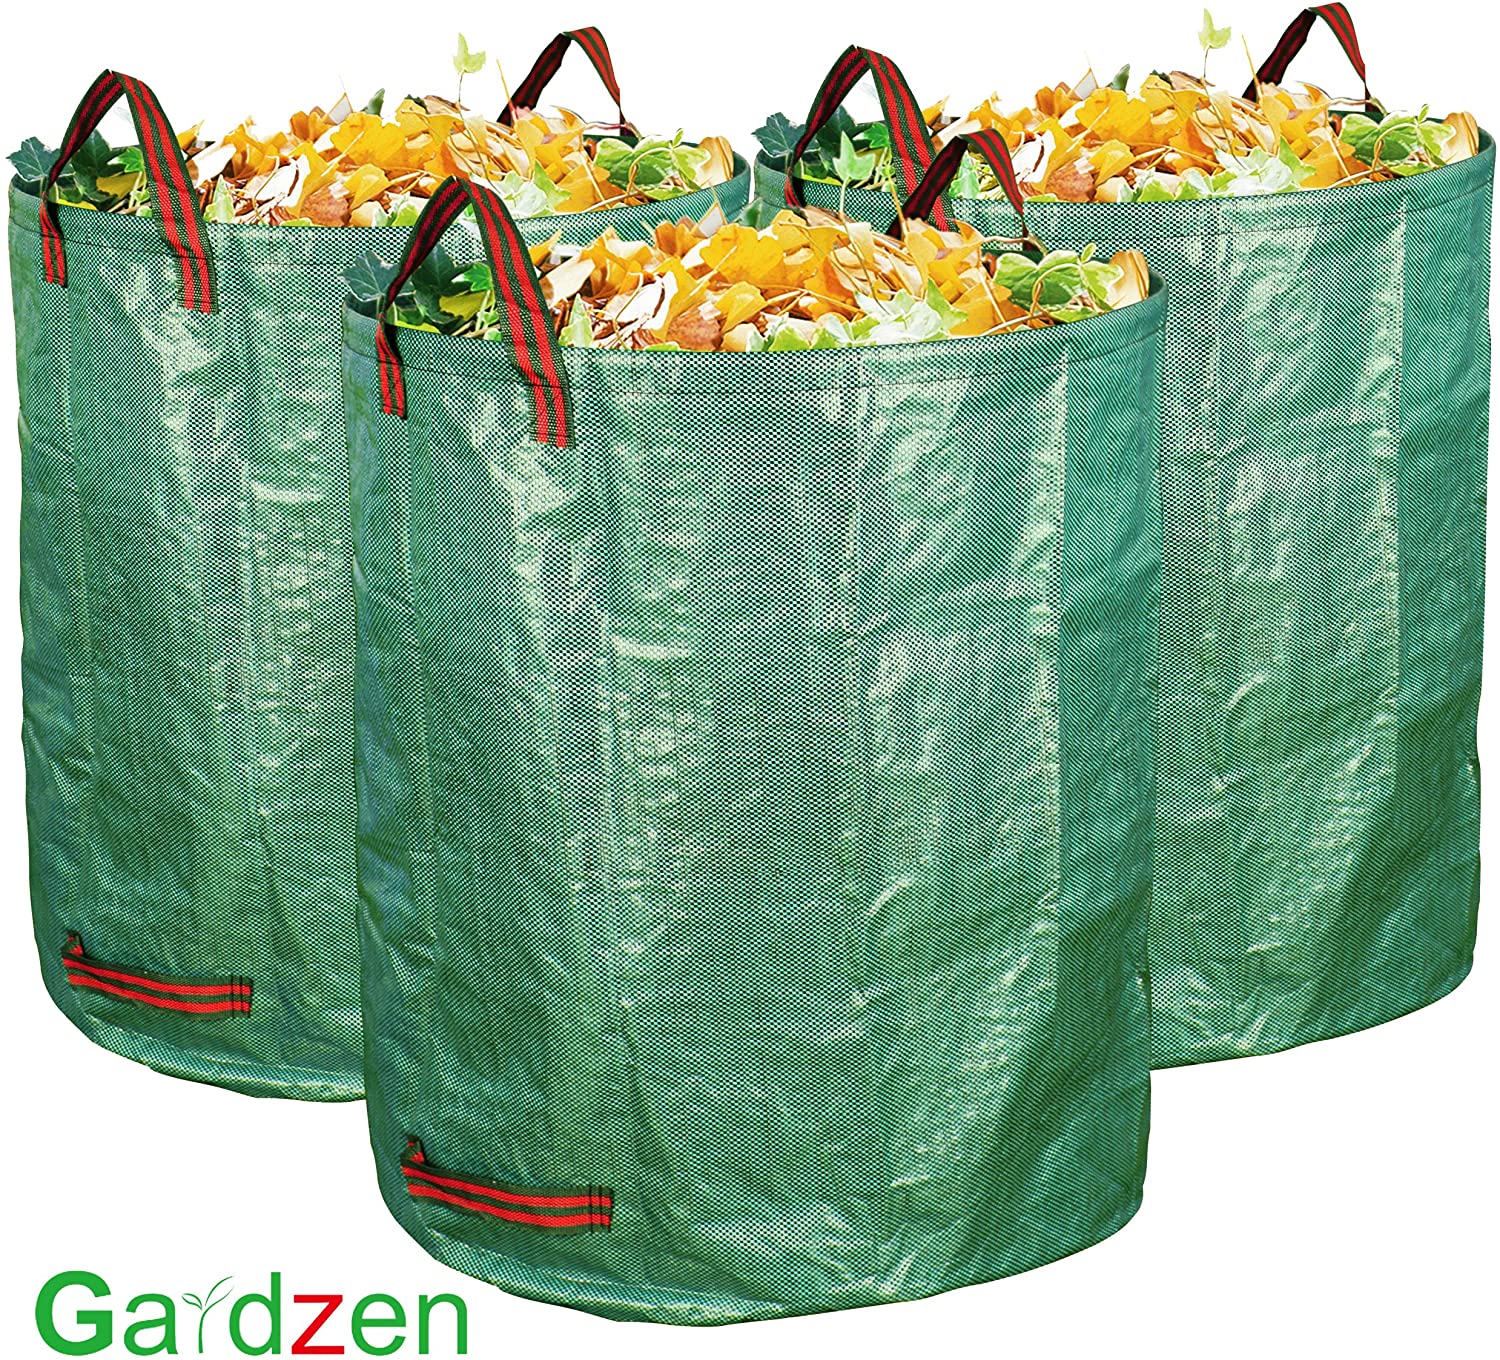 Kitcheniva Reusable Garden Waste Bags 72 Gallon 1 Pack, 1 pack - Foods Co.